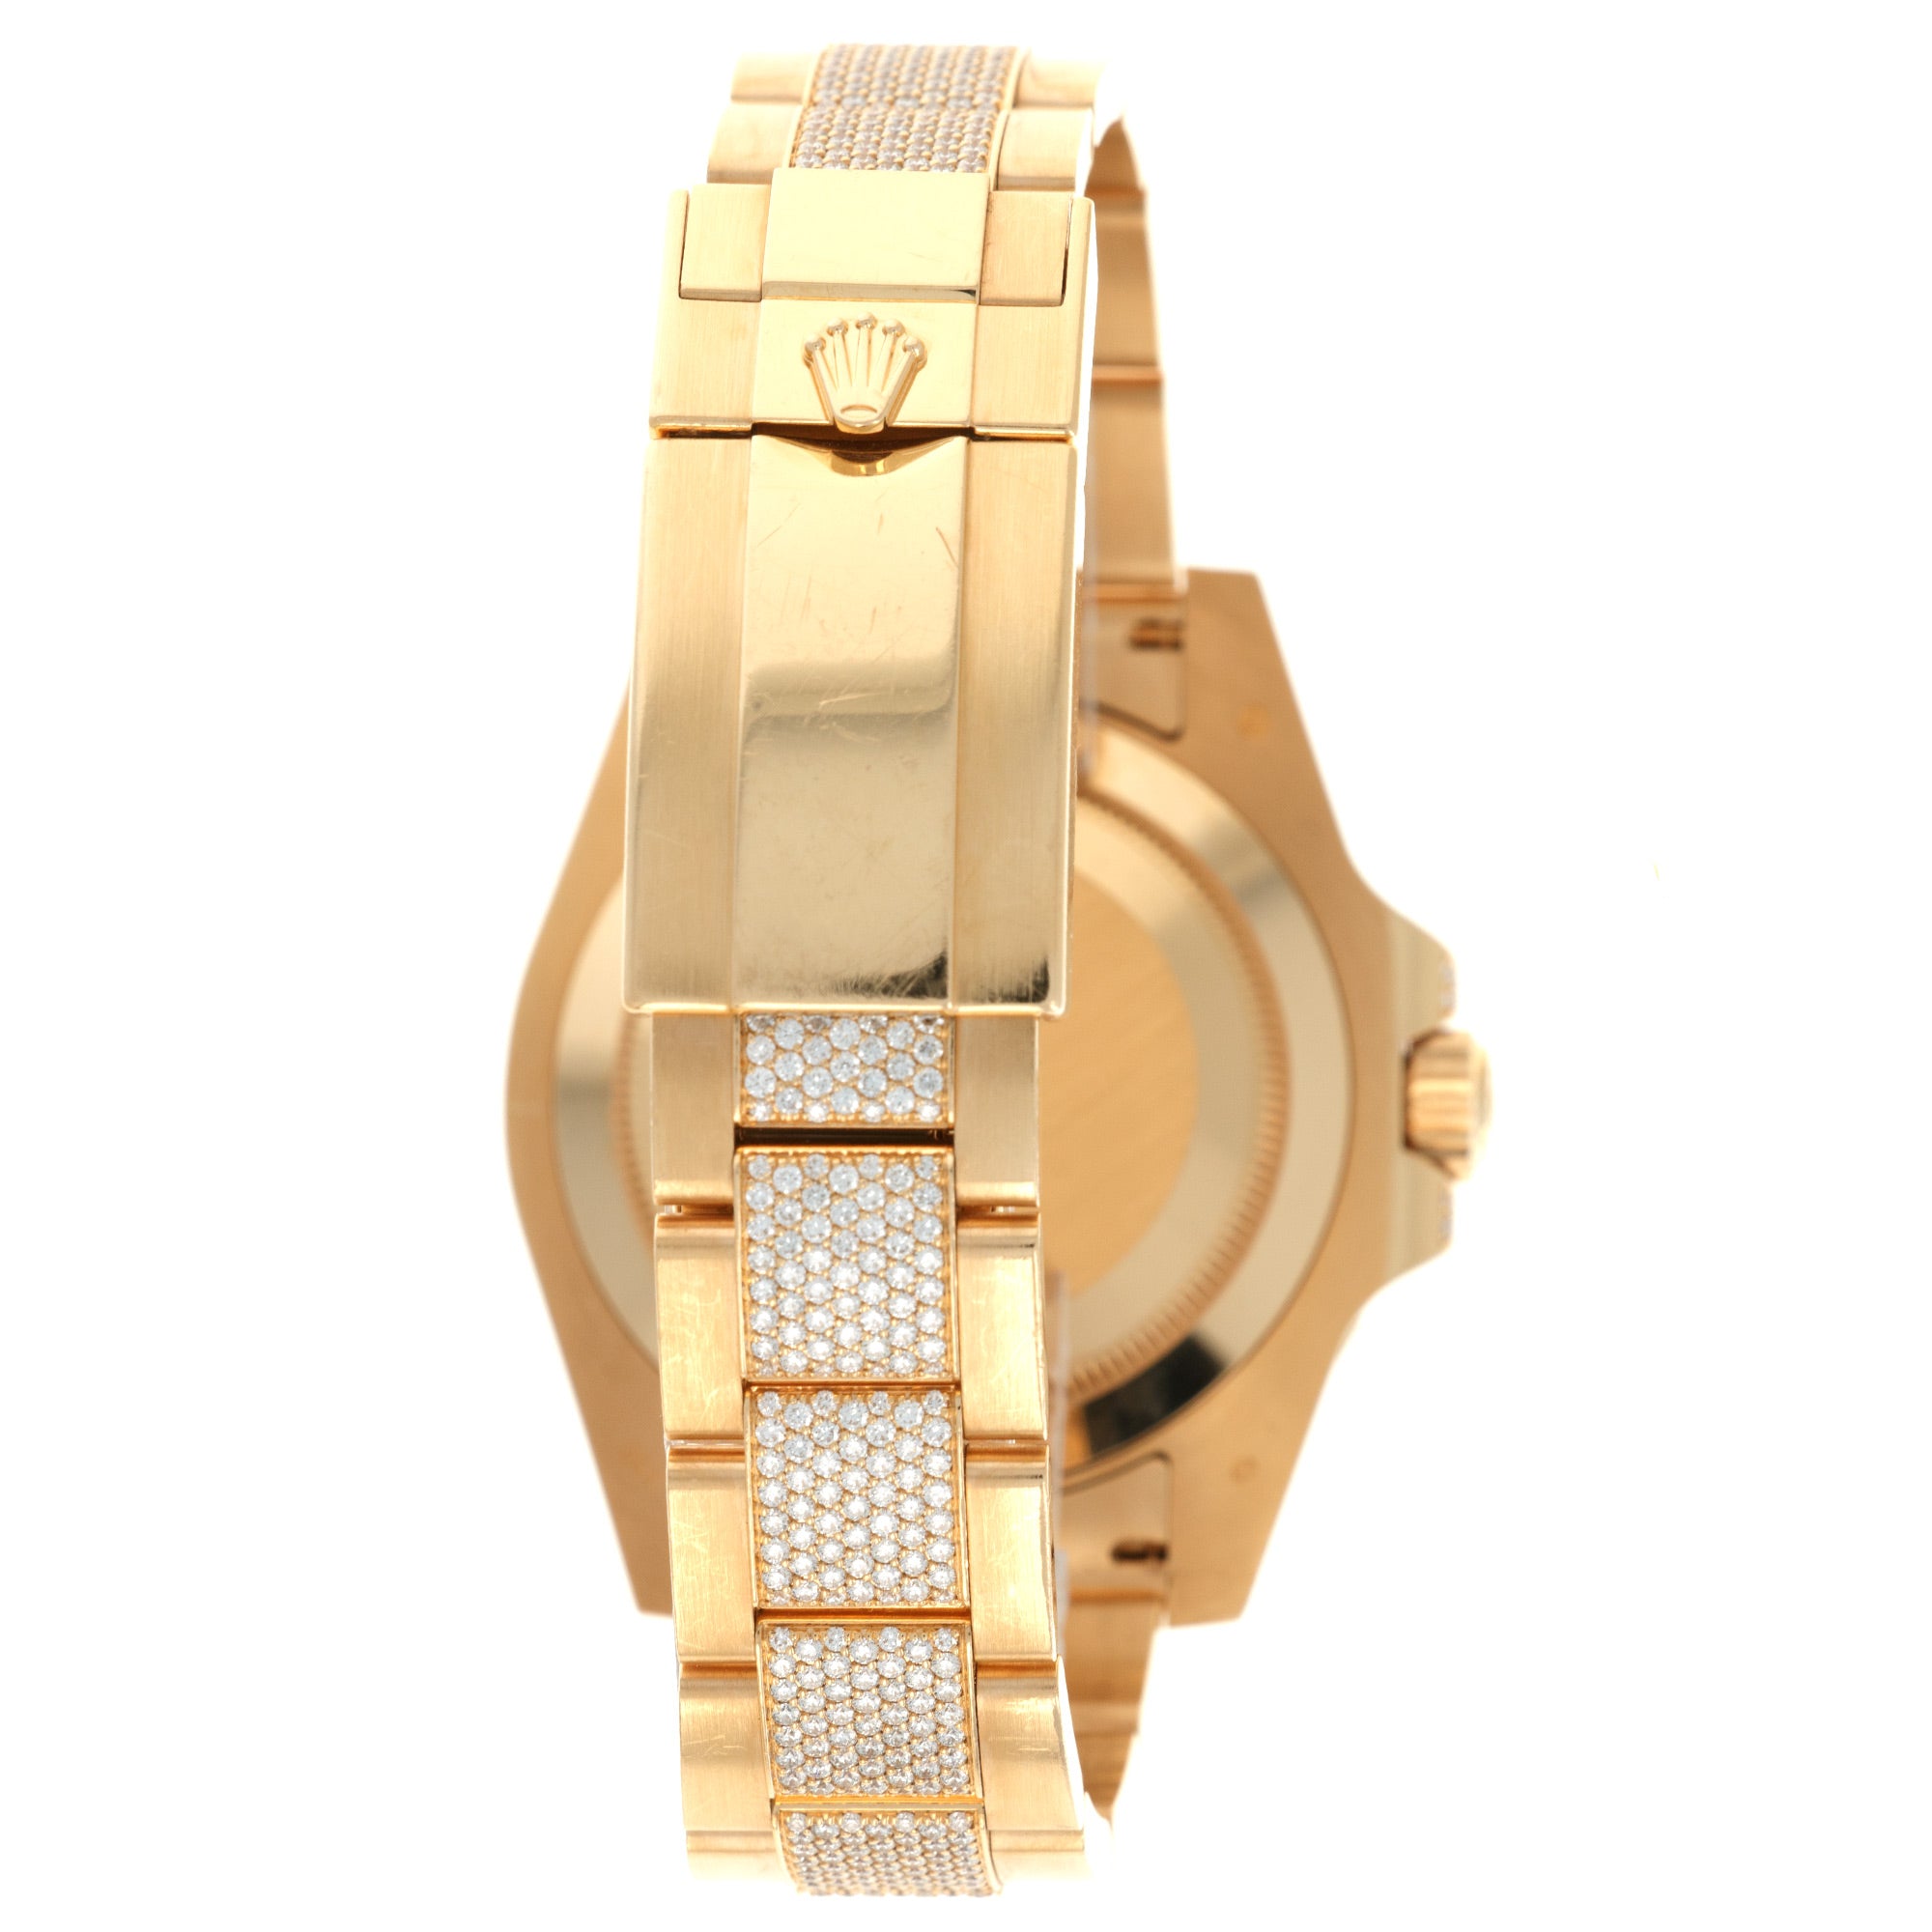 Rolex - Rolex Yellow Gold GMT-Master II Diamond Sapphire Watch Ref. 116758 - The Keystone Watches